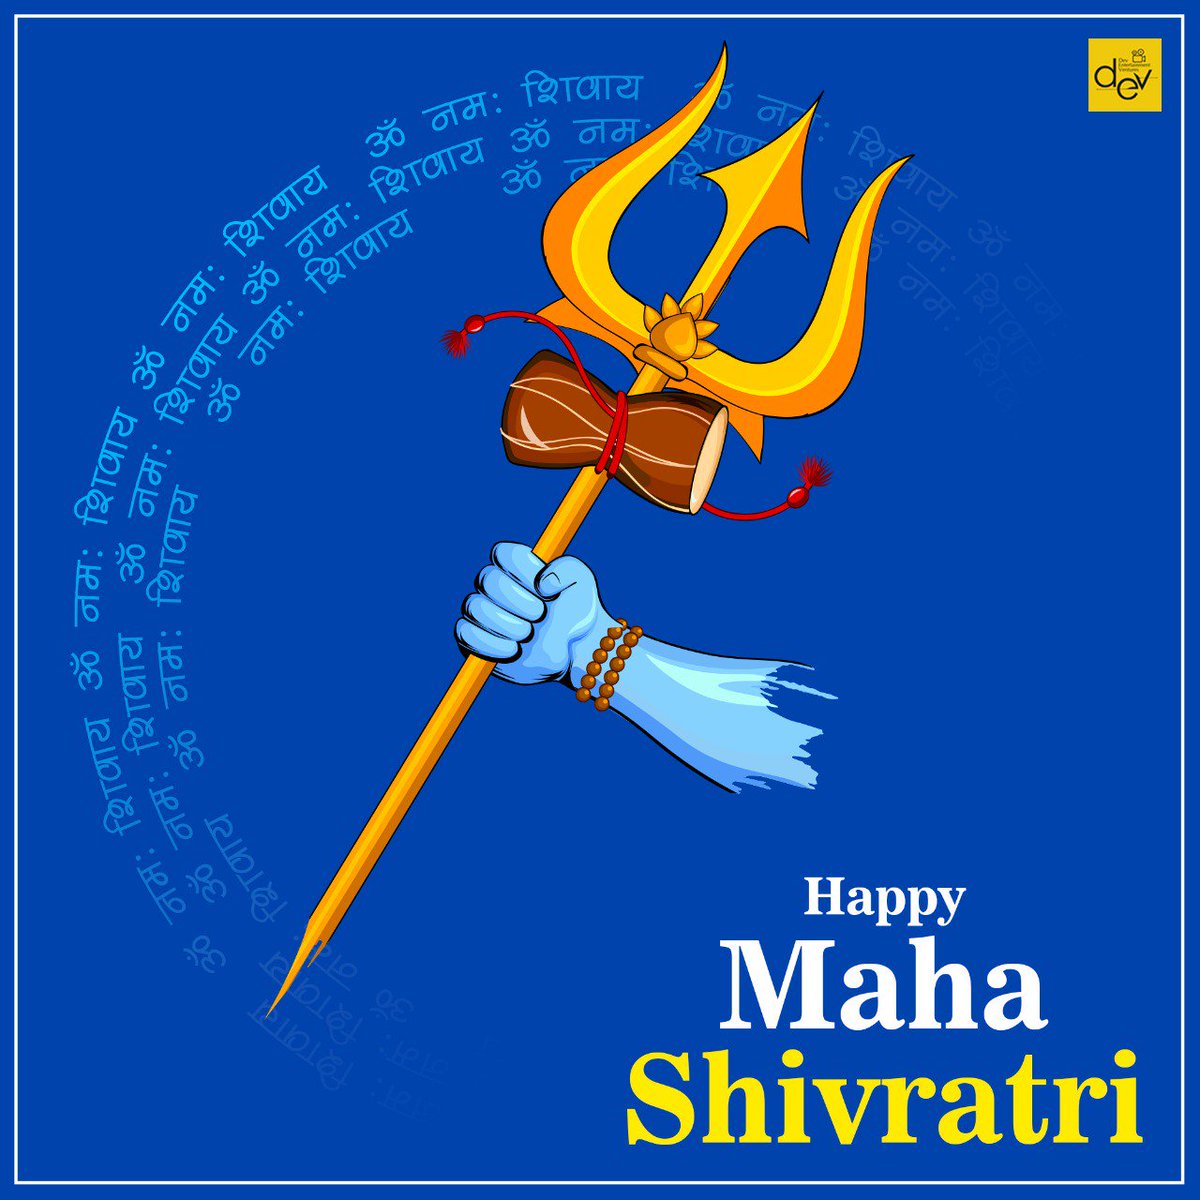 Wishing all of you a Very Happy Shivratri. Have a great time ahead. #Shiv #Shivratri #MahaShivaratri #MahaShivaratri 🙏